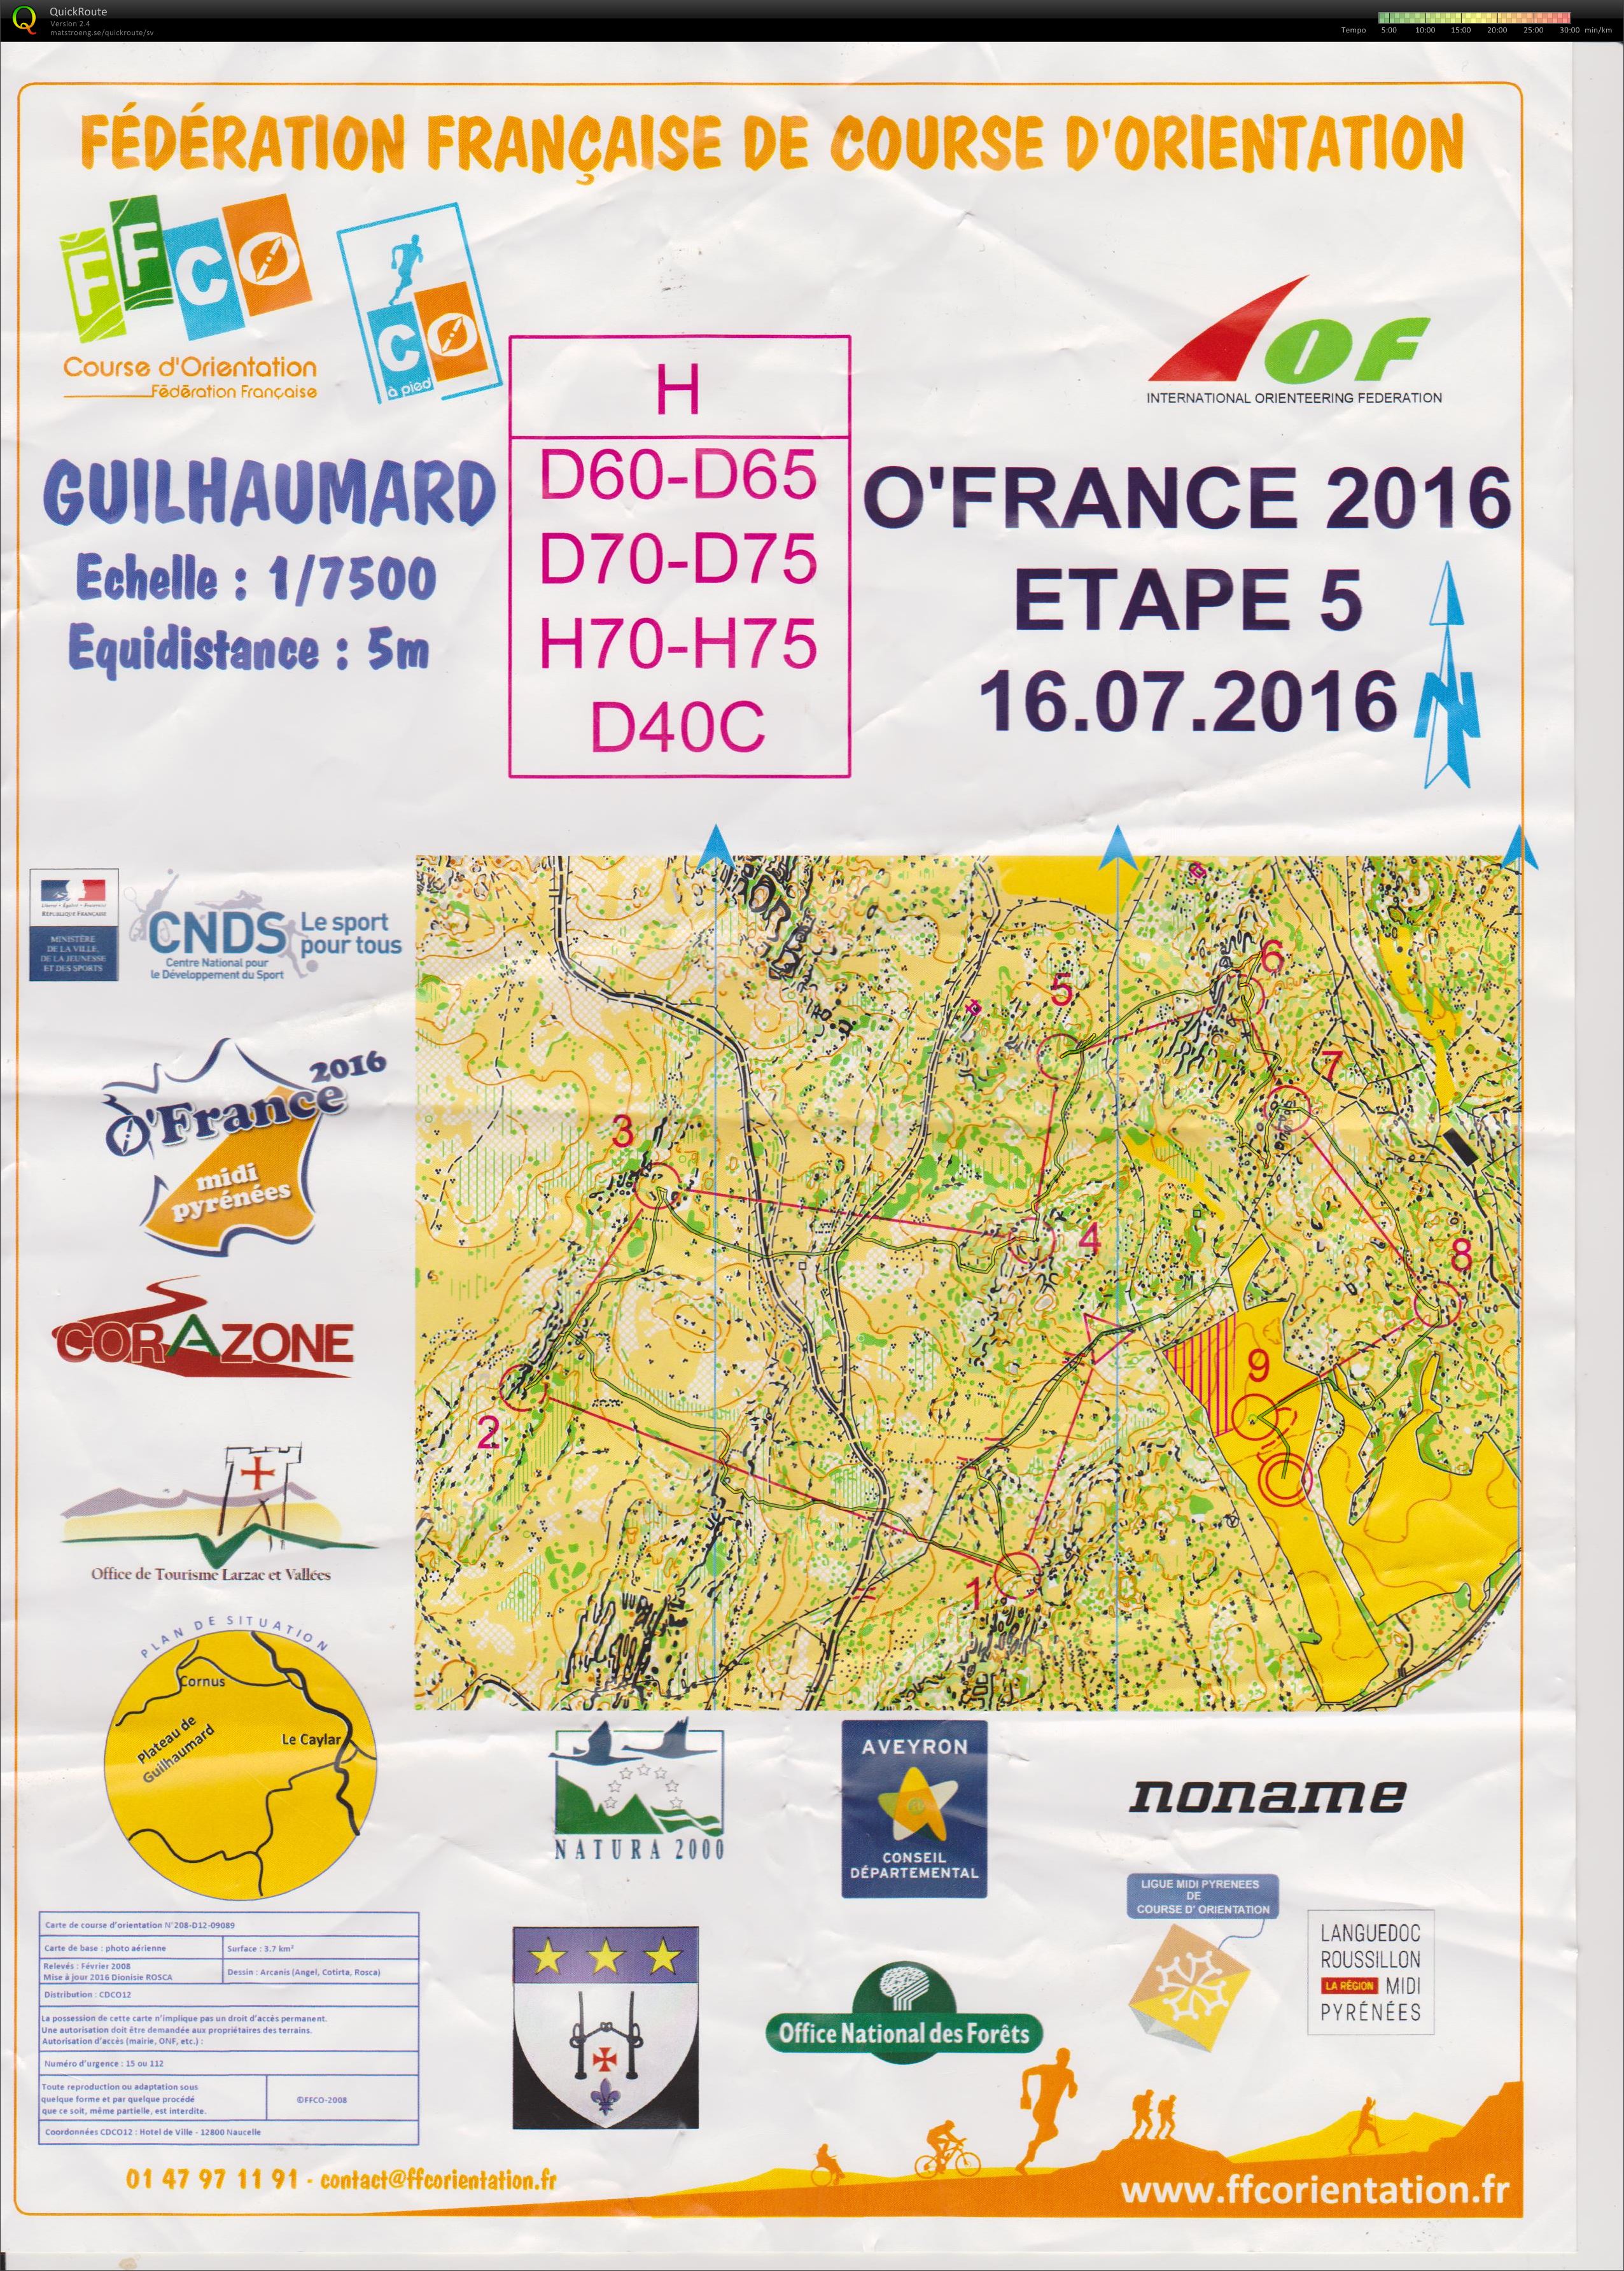 O'France 2016 Etp 5  (16-07-2016)